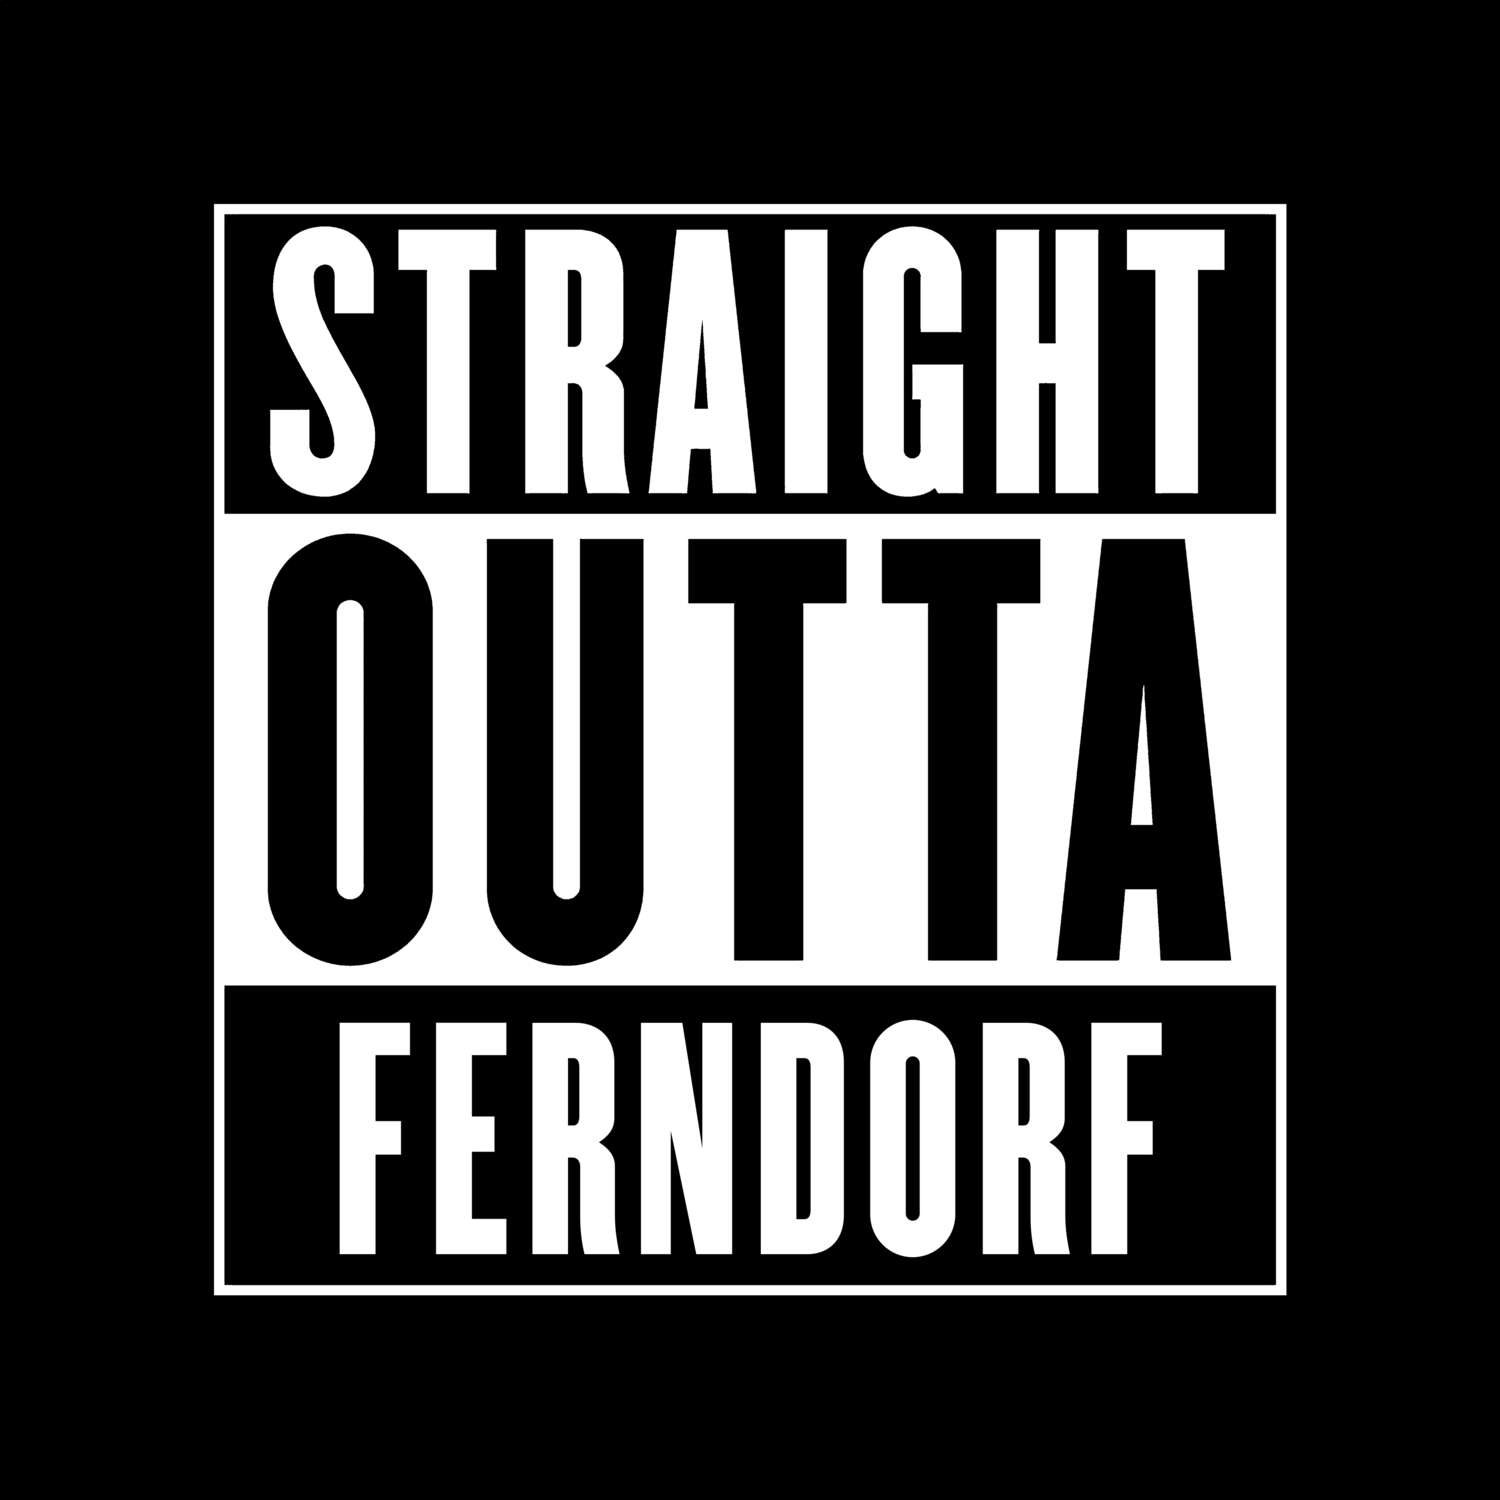 Ferndorf T-Shirt »Straight Outta«